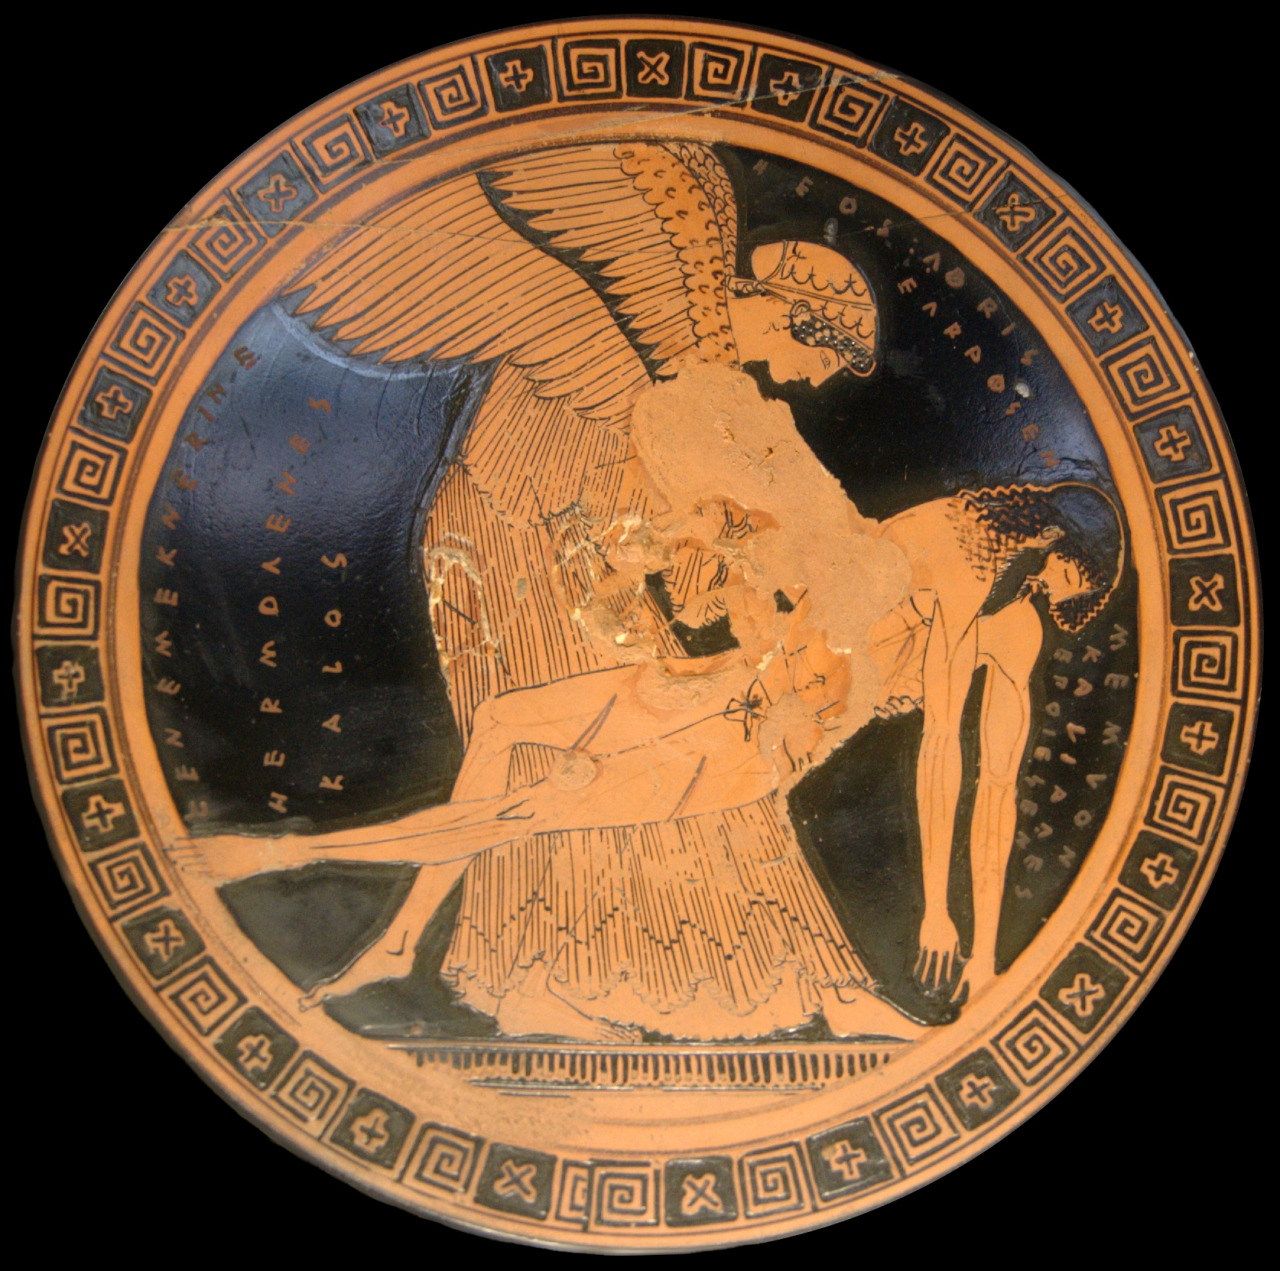 Douris (painter) and Kalliades (potter) - 5th century BC